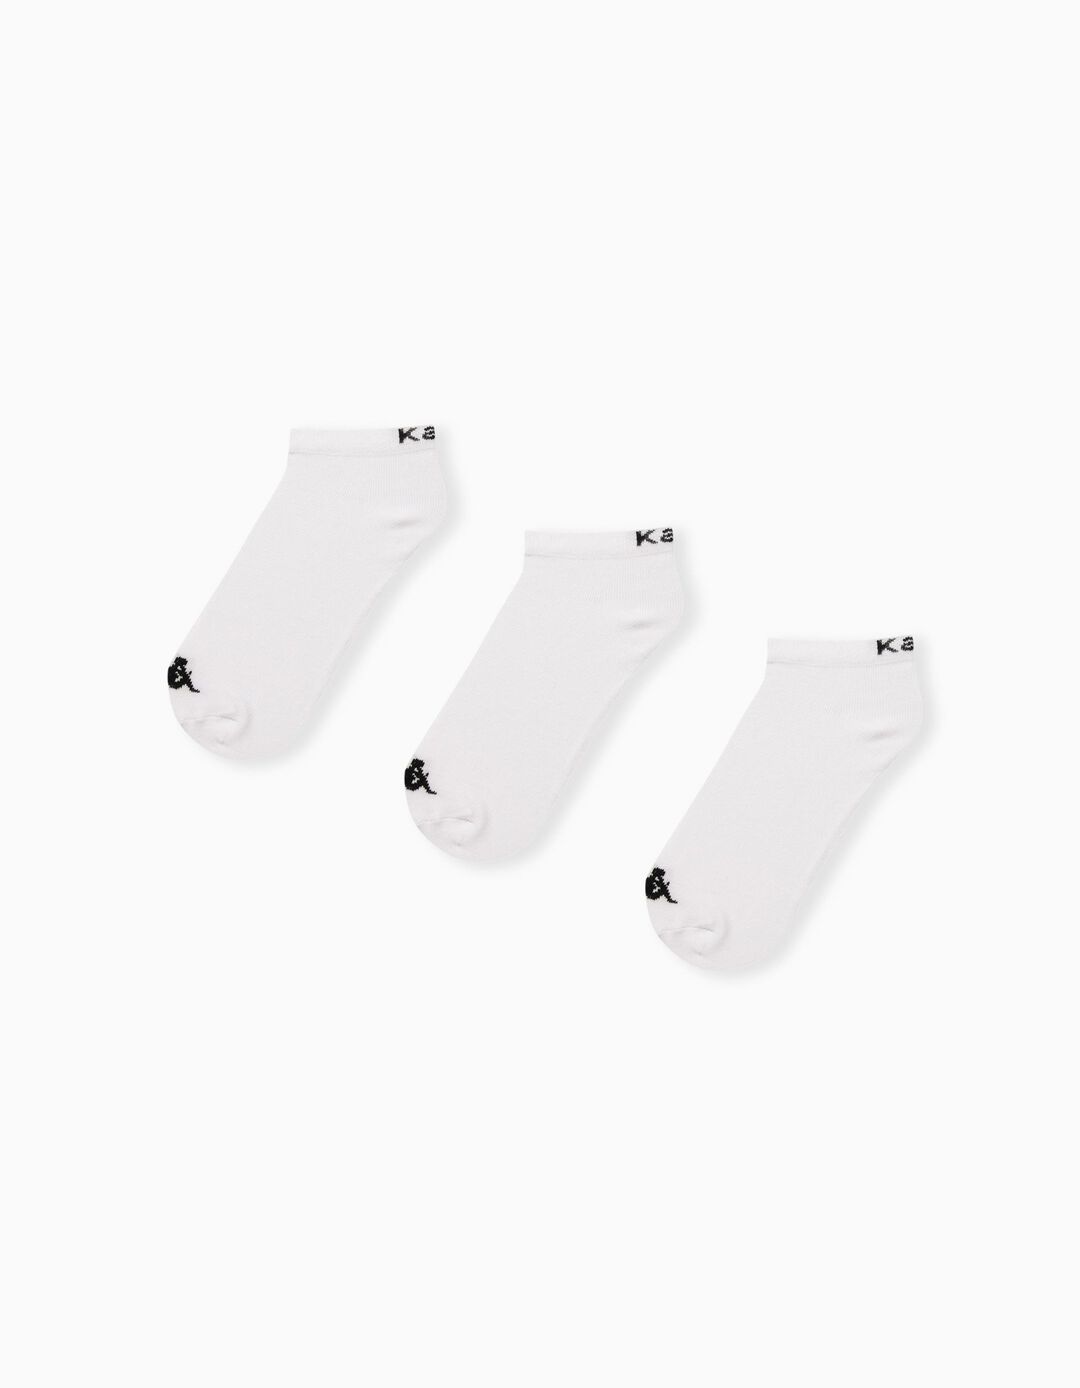 3 Pairs 'Kappa' Trainer Socks, Made in Portugal